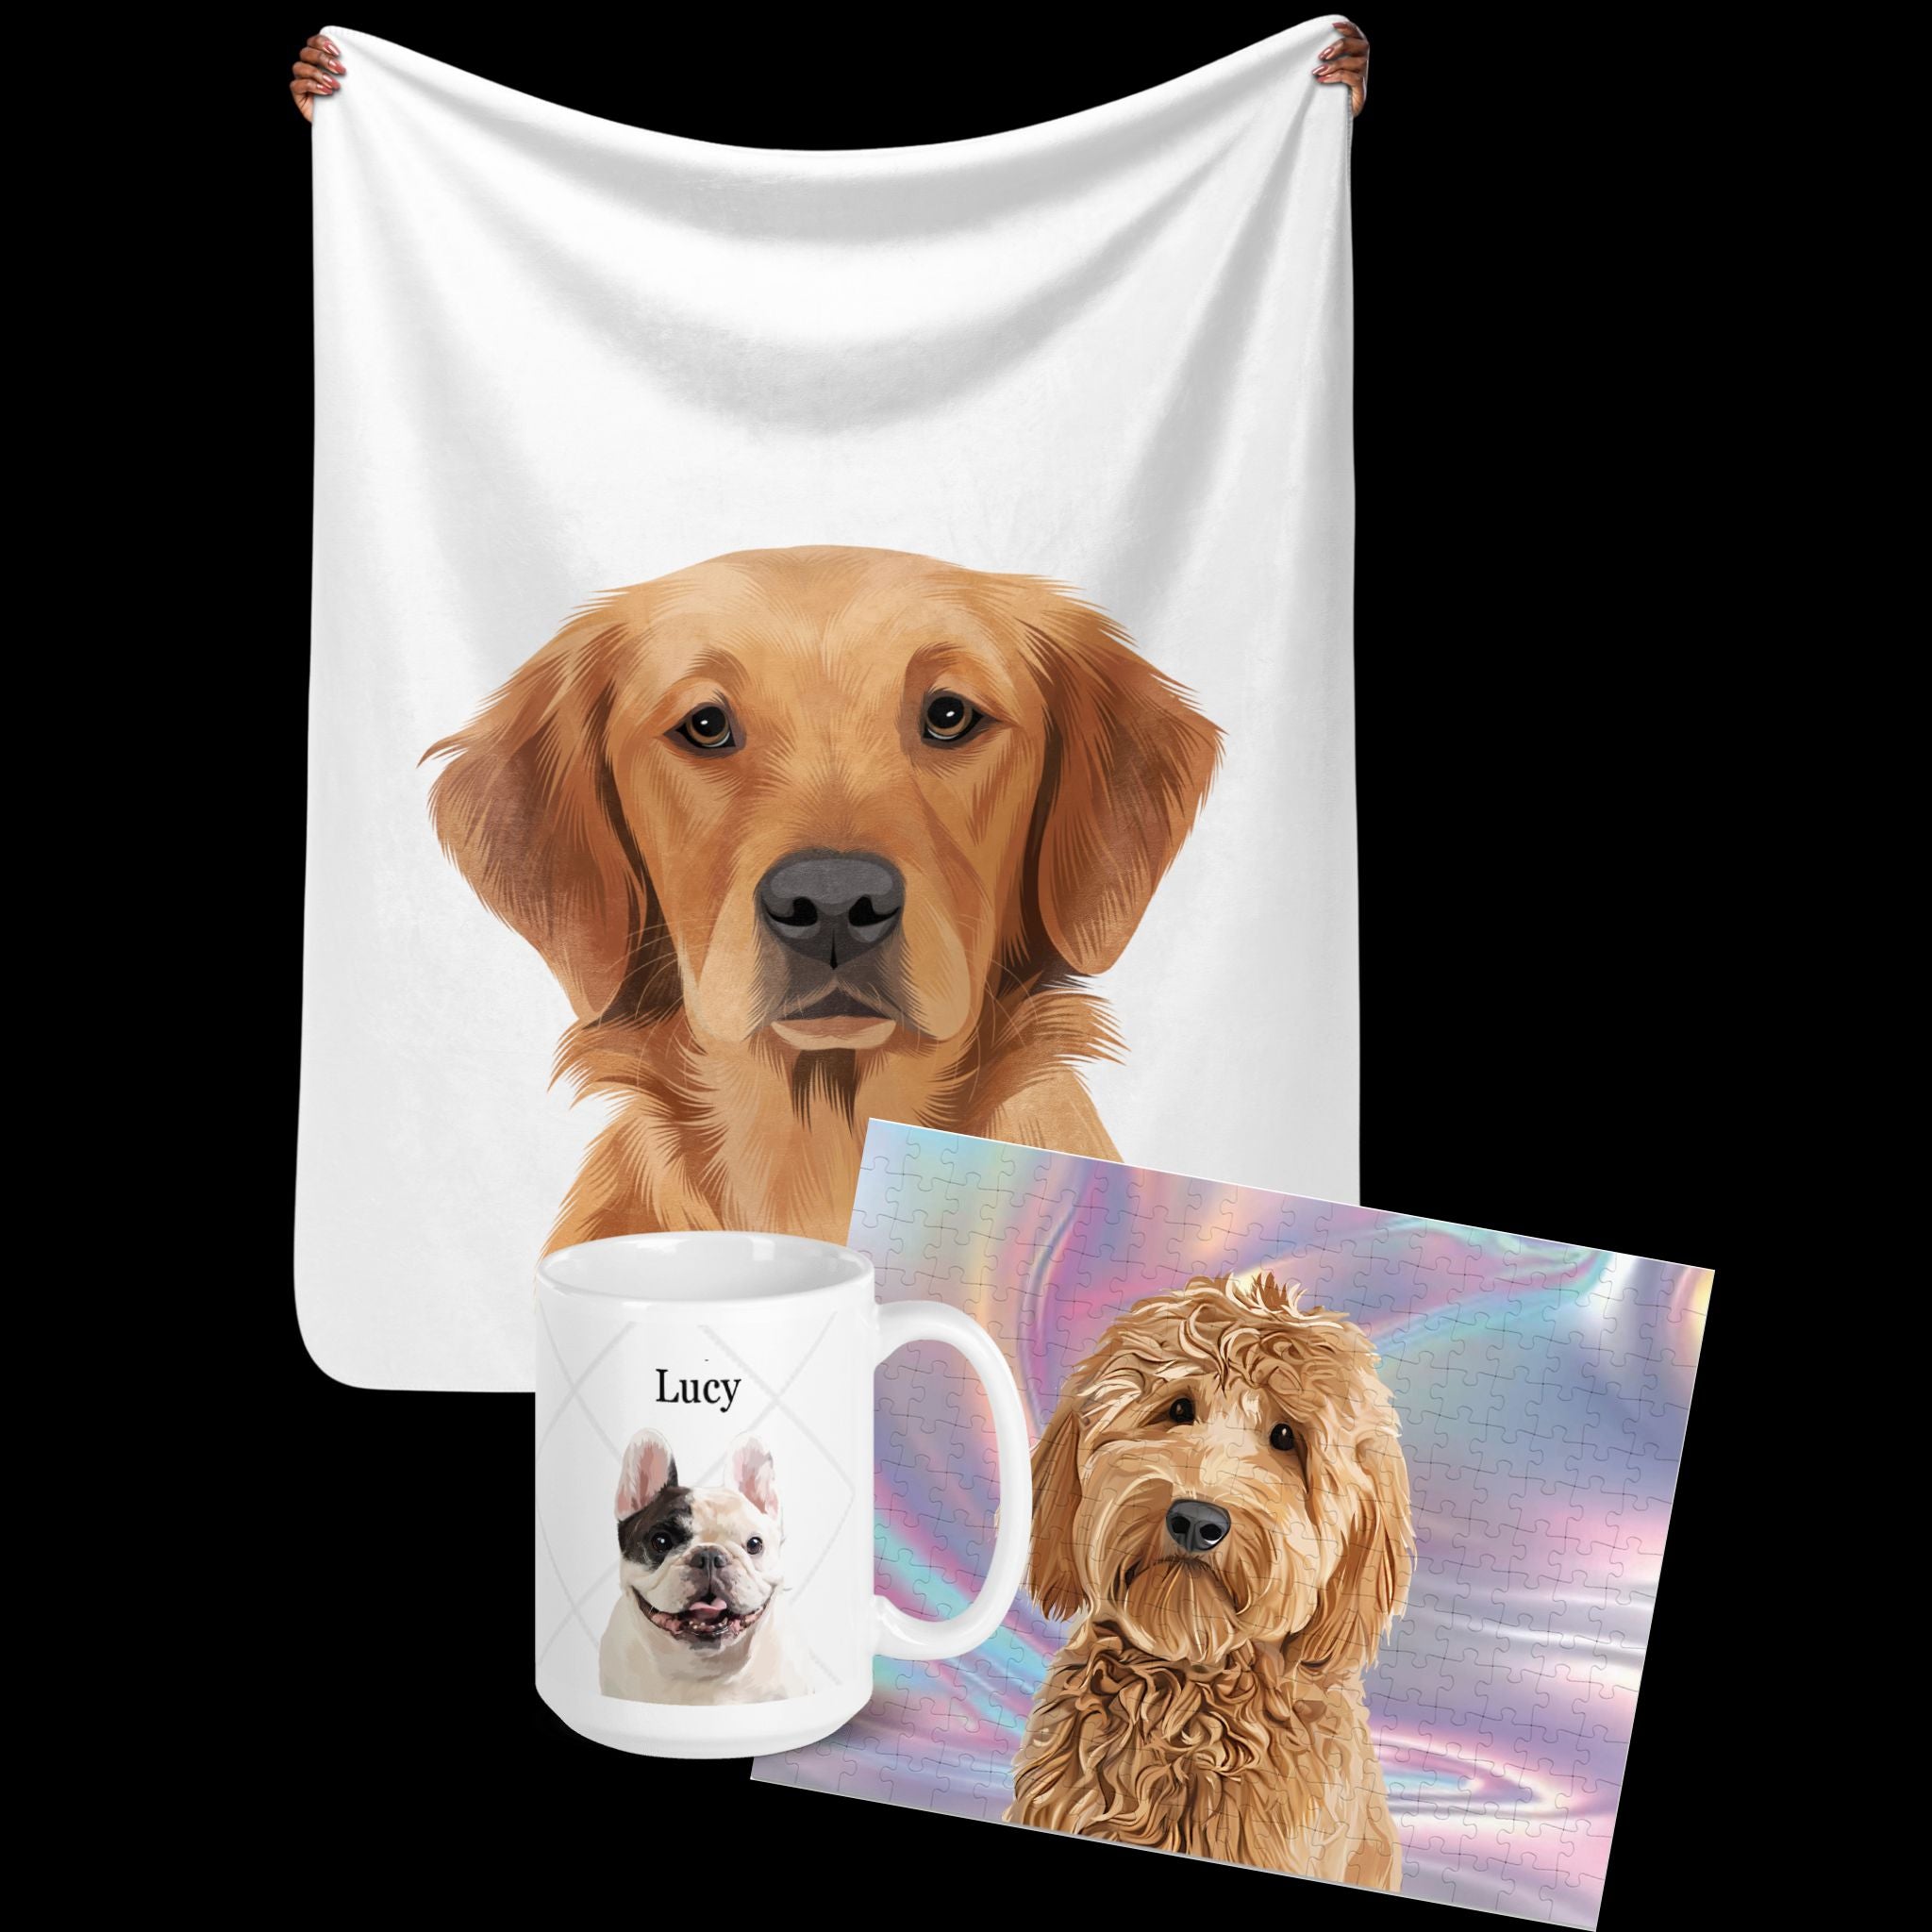 Single Dog Portrait Gifts